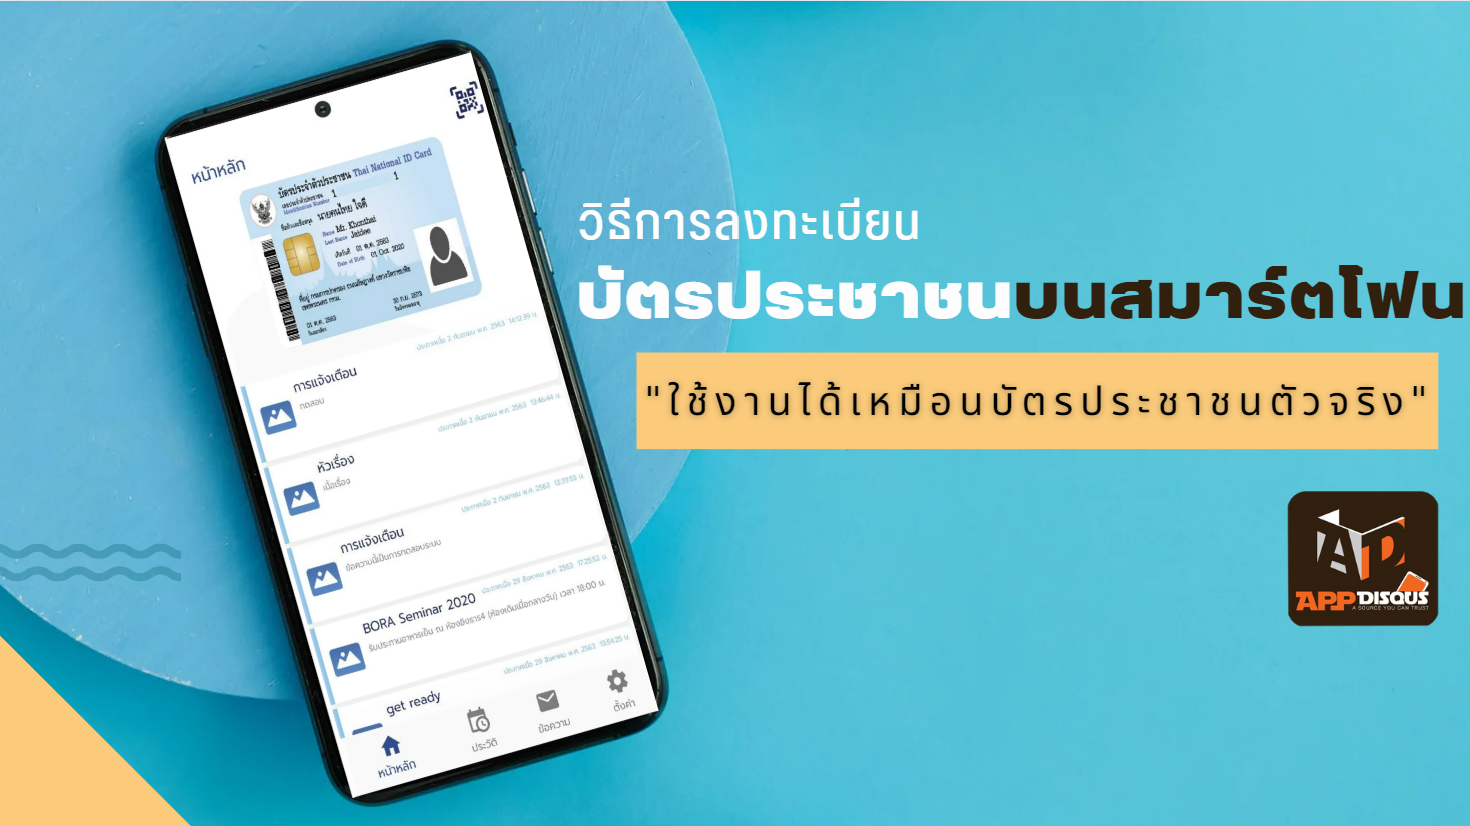 ID Digital Thailand | D.DOPA | คนไทยใช้ Digital ID บัตรประชาชนบนสมาร์ทโฟนแทนบัตรตัวจริงได้แล้ว พร้อมวิธีทำ